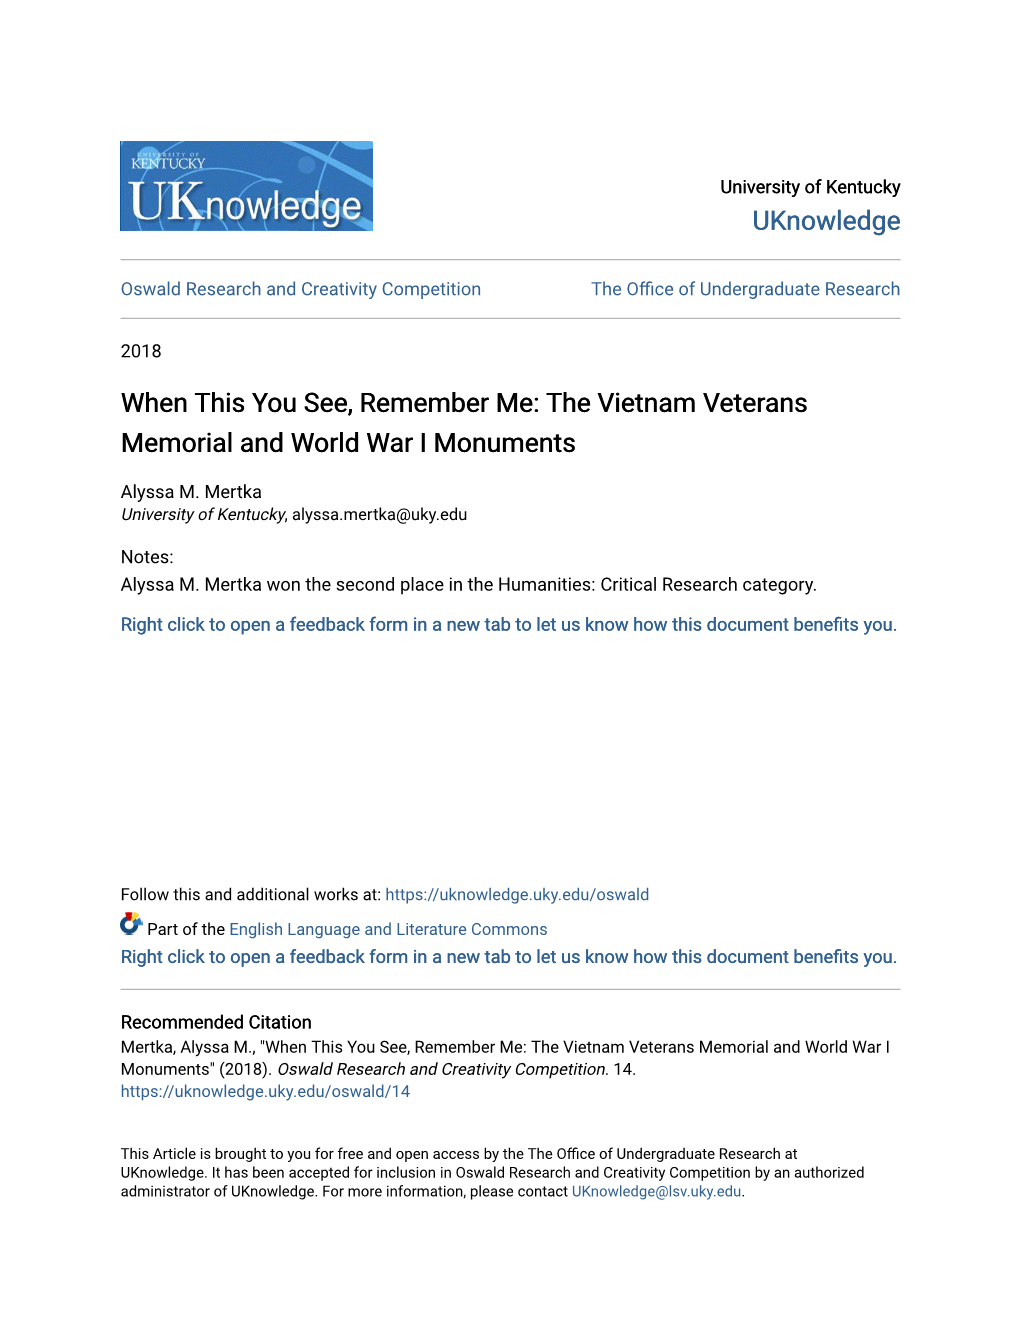 The Vietnam Veterans Memorial and World War I Monuments